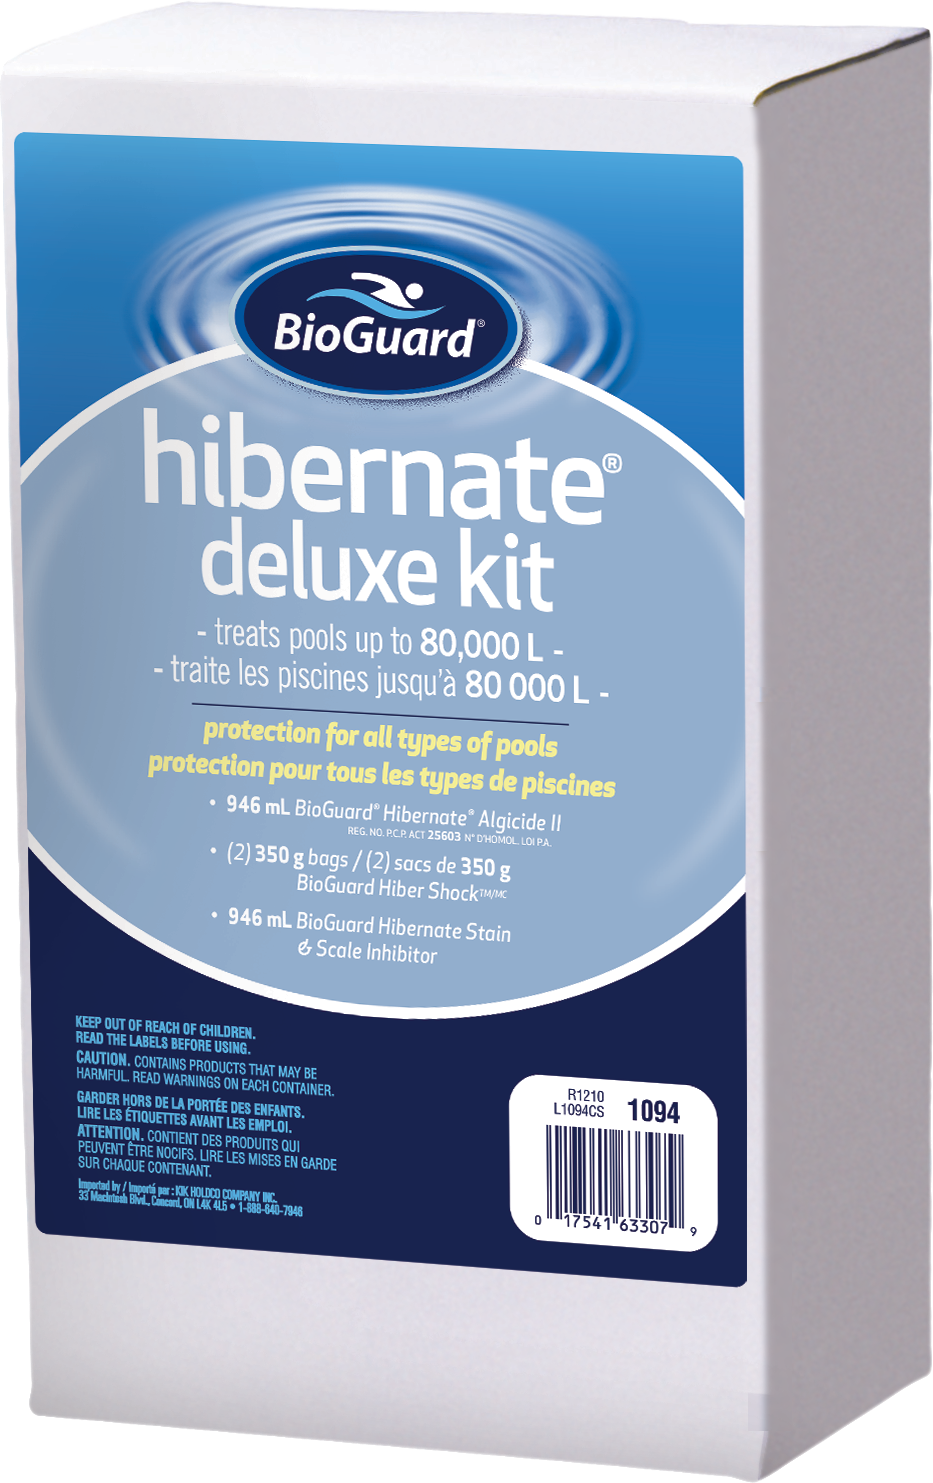 BioGuard Hibernate Closing Kit Deluxe 80000L - BioGuard Hibernate Closing Kit Deluxe 80,000L